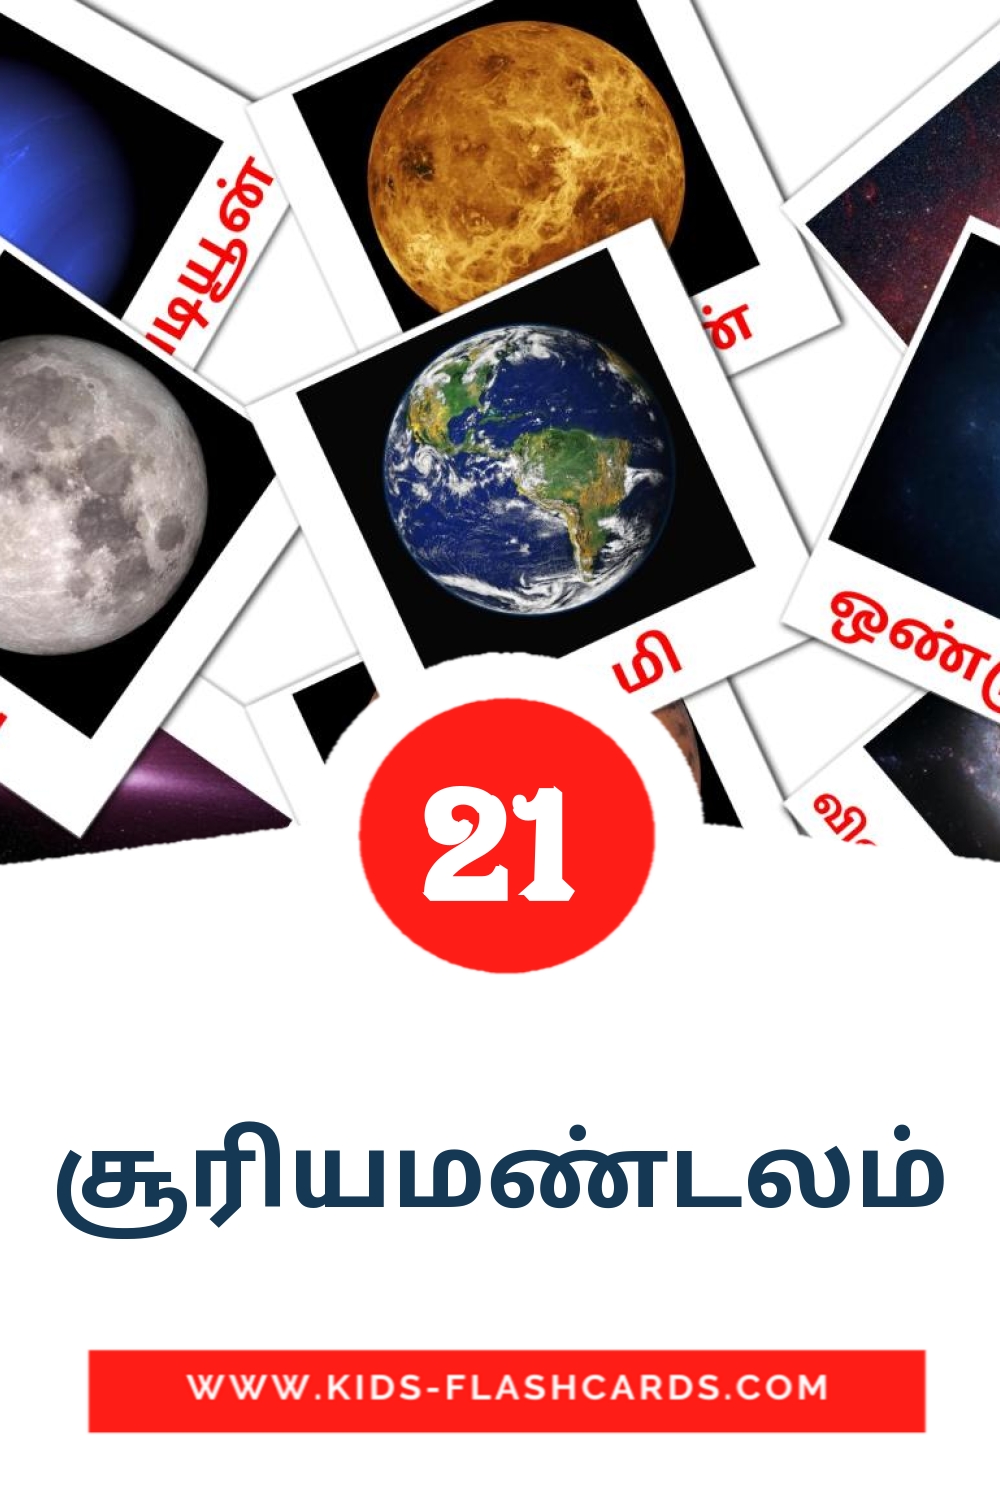 21 carte illustrate di சூரியமண்டலம் per la scuola materna in tamil